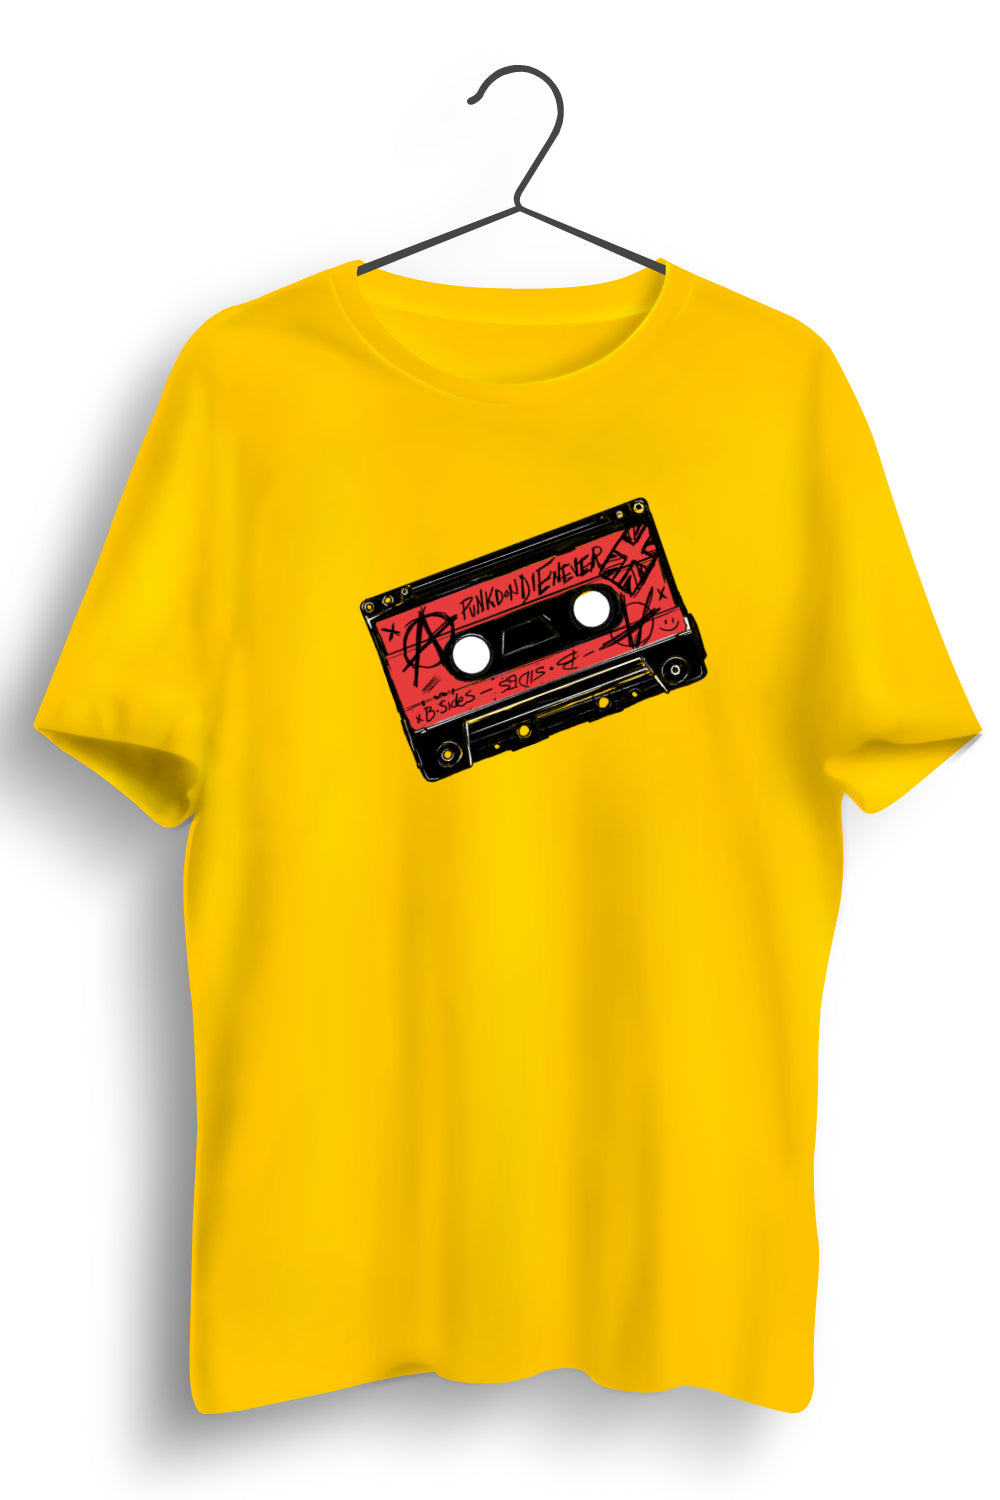 Punk Tape Graphic Printed Yellow Tshirt